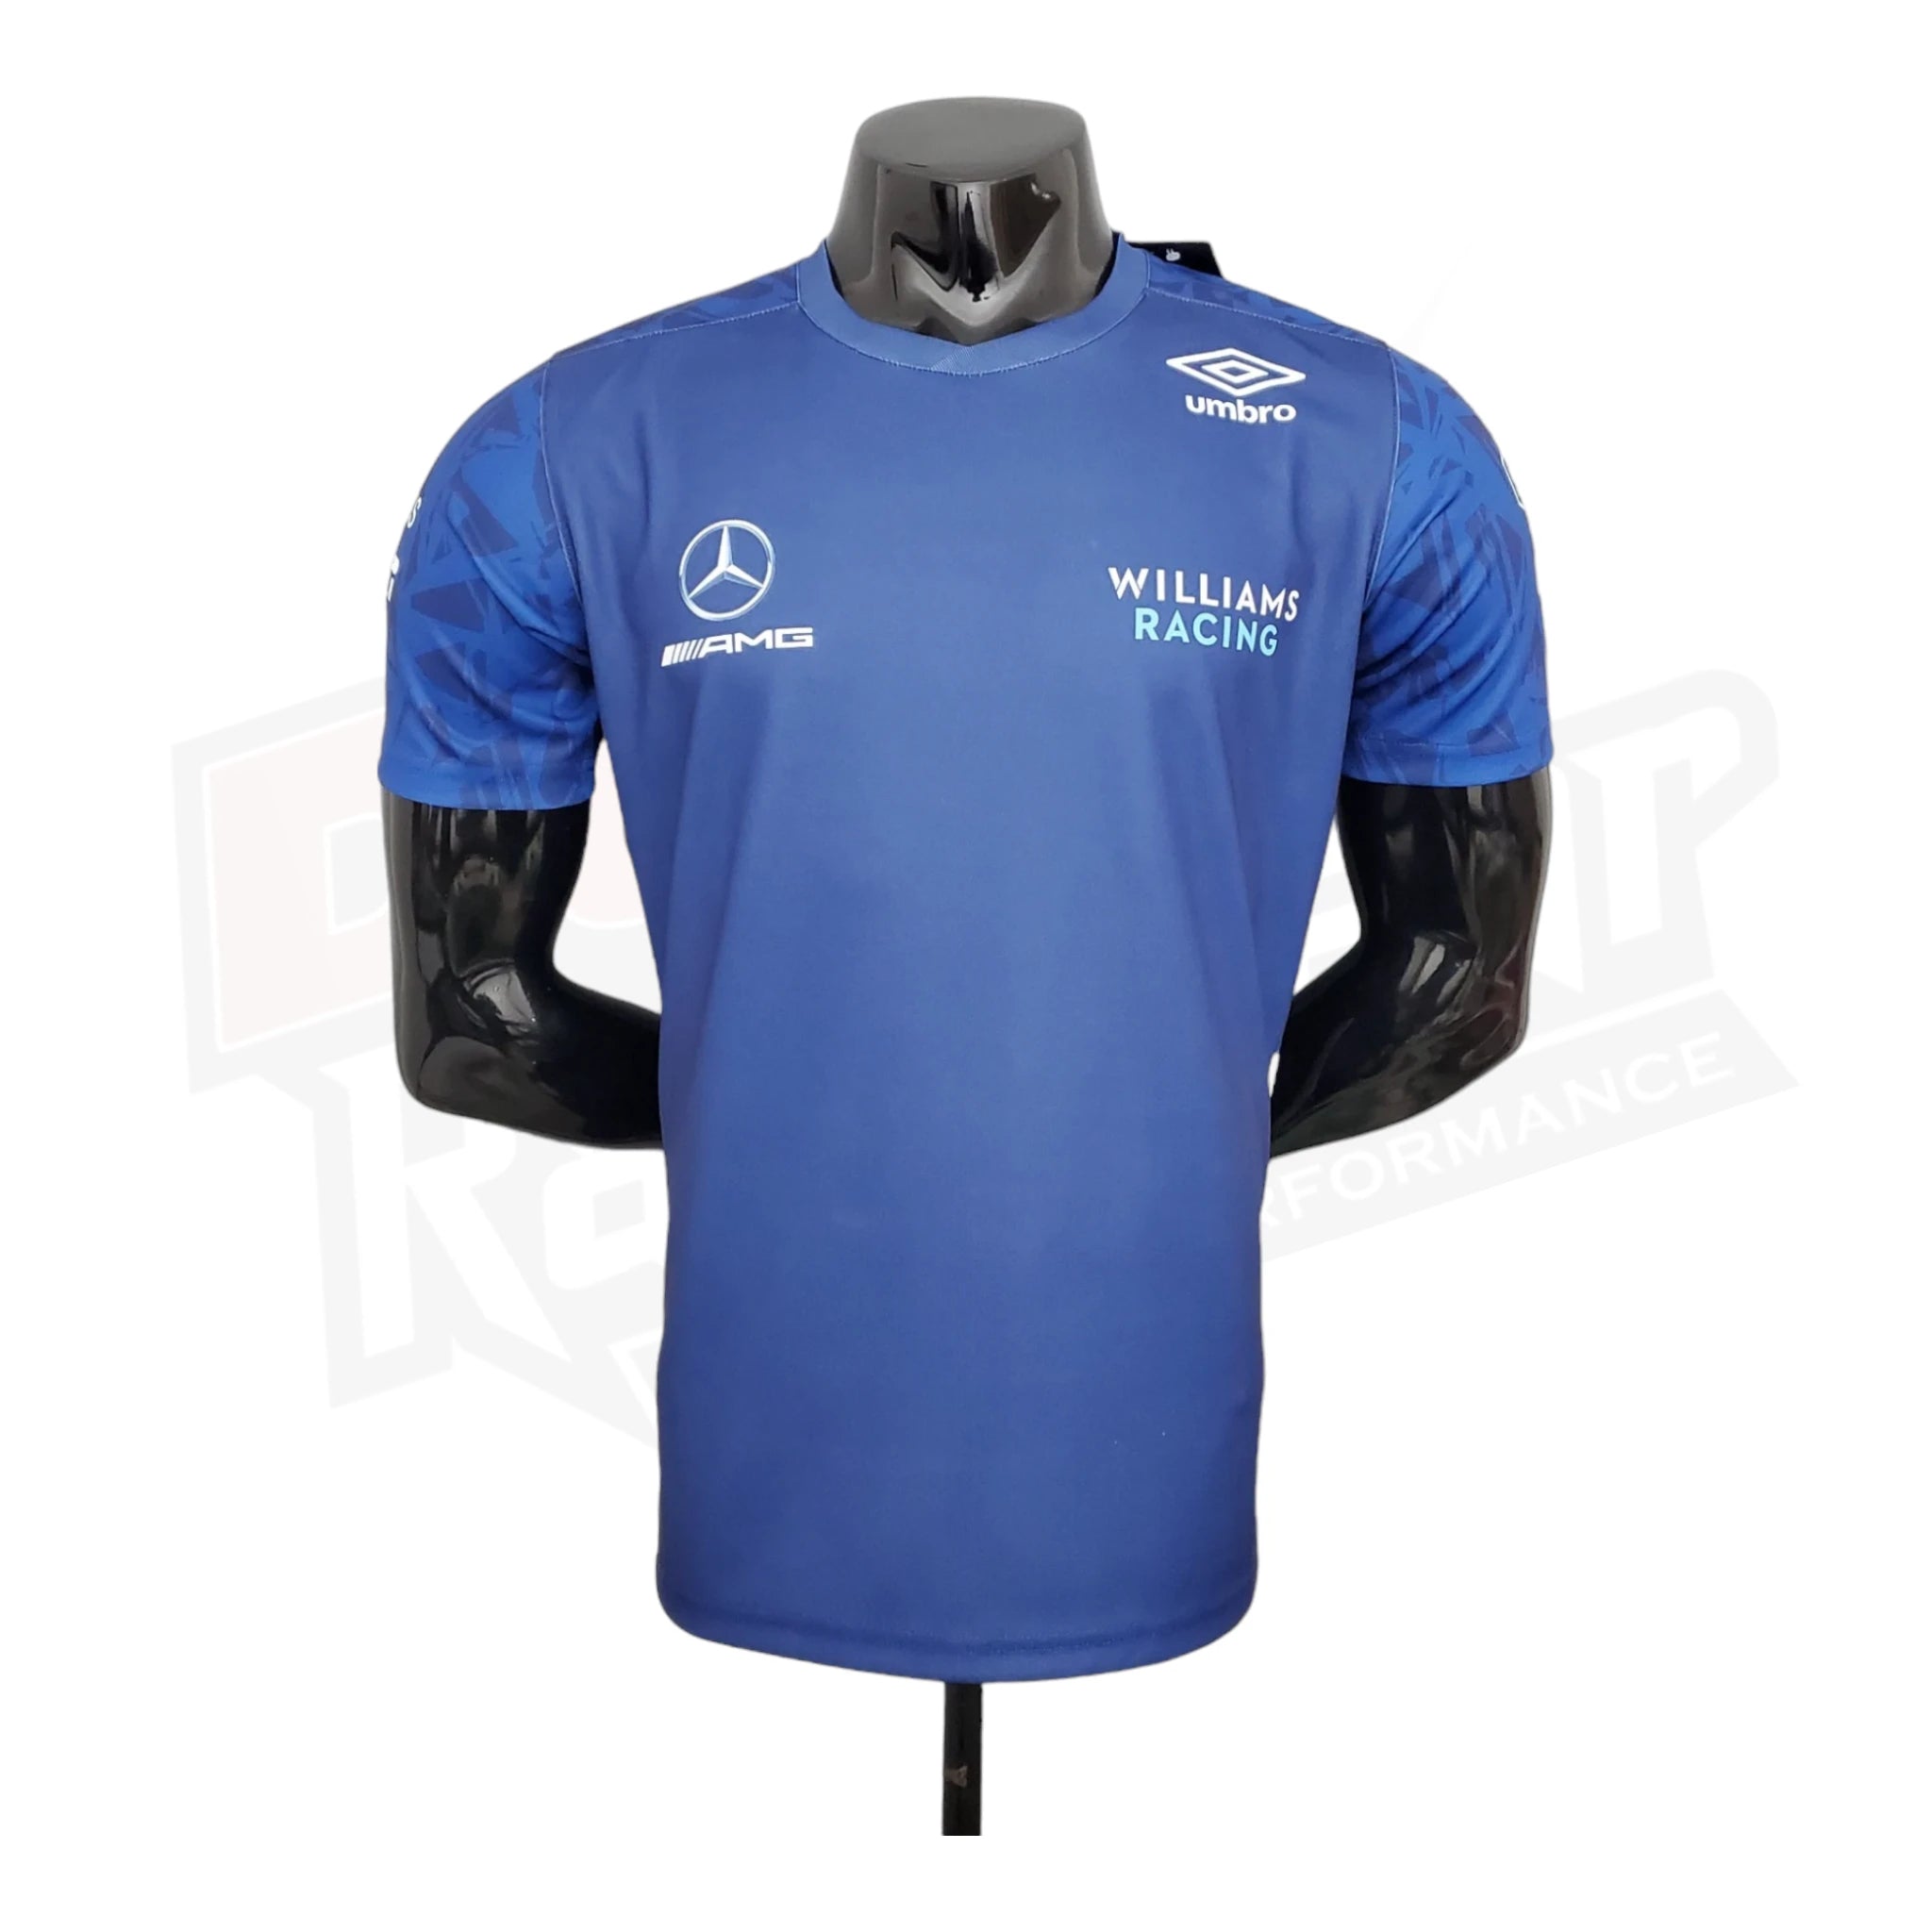 Williams Racing Formula One T-Shirt